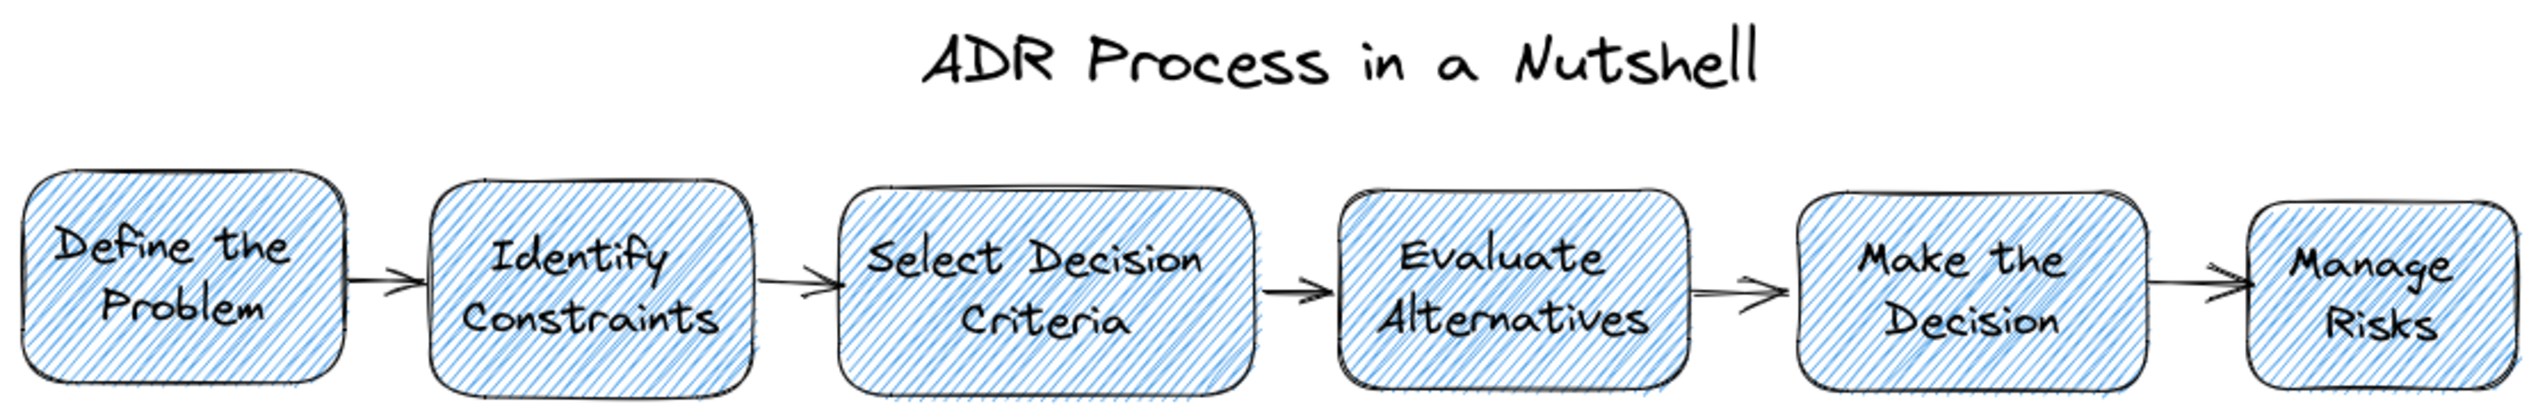 ADR Process